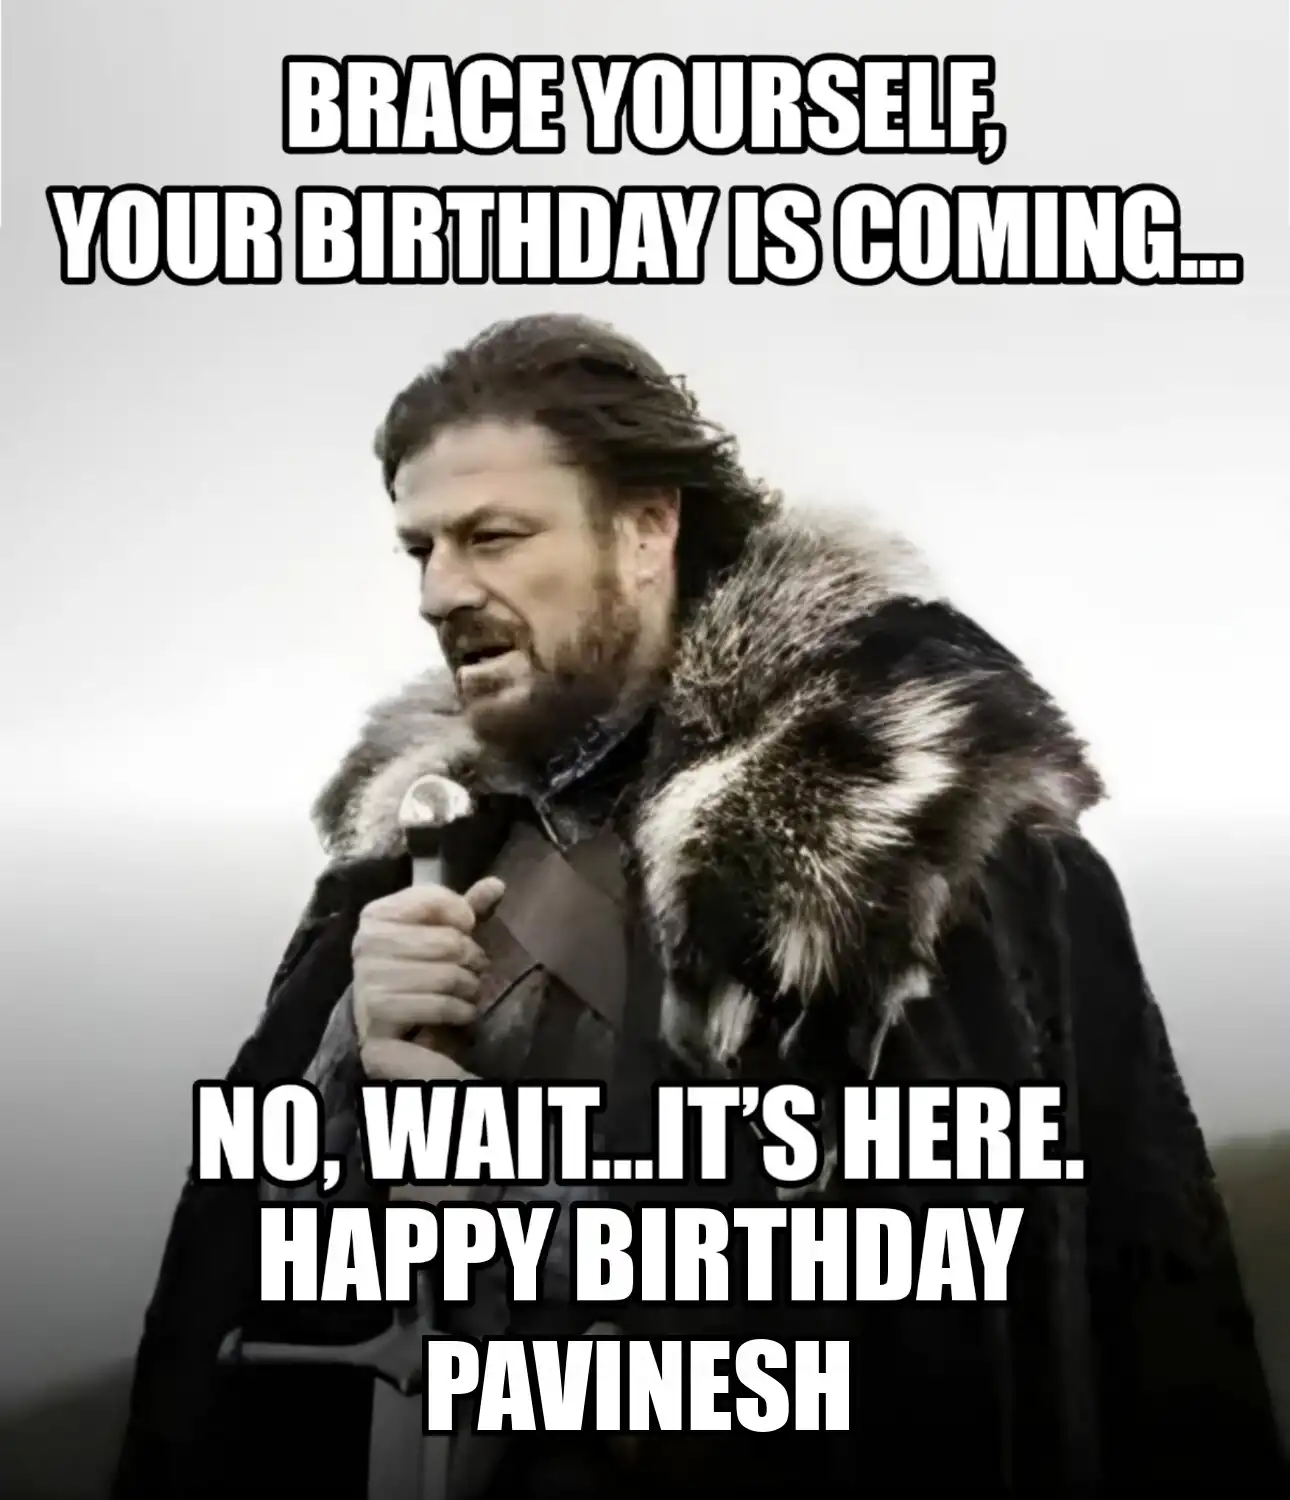 Happy Birthday Pavinesh Brace Yourself Your Birthday Is Coming Meme